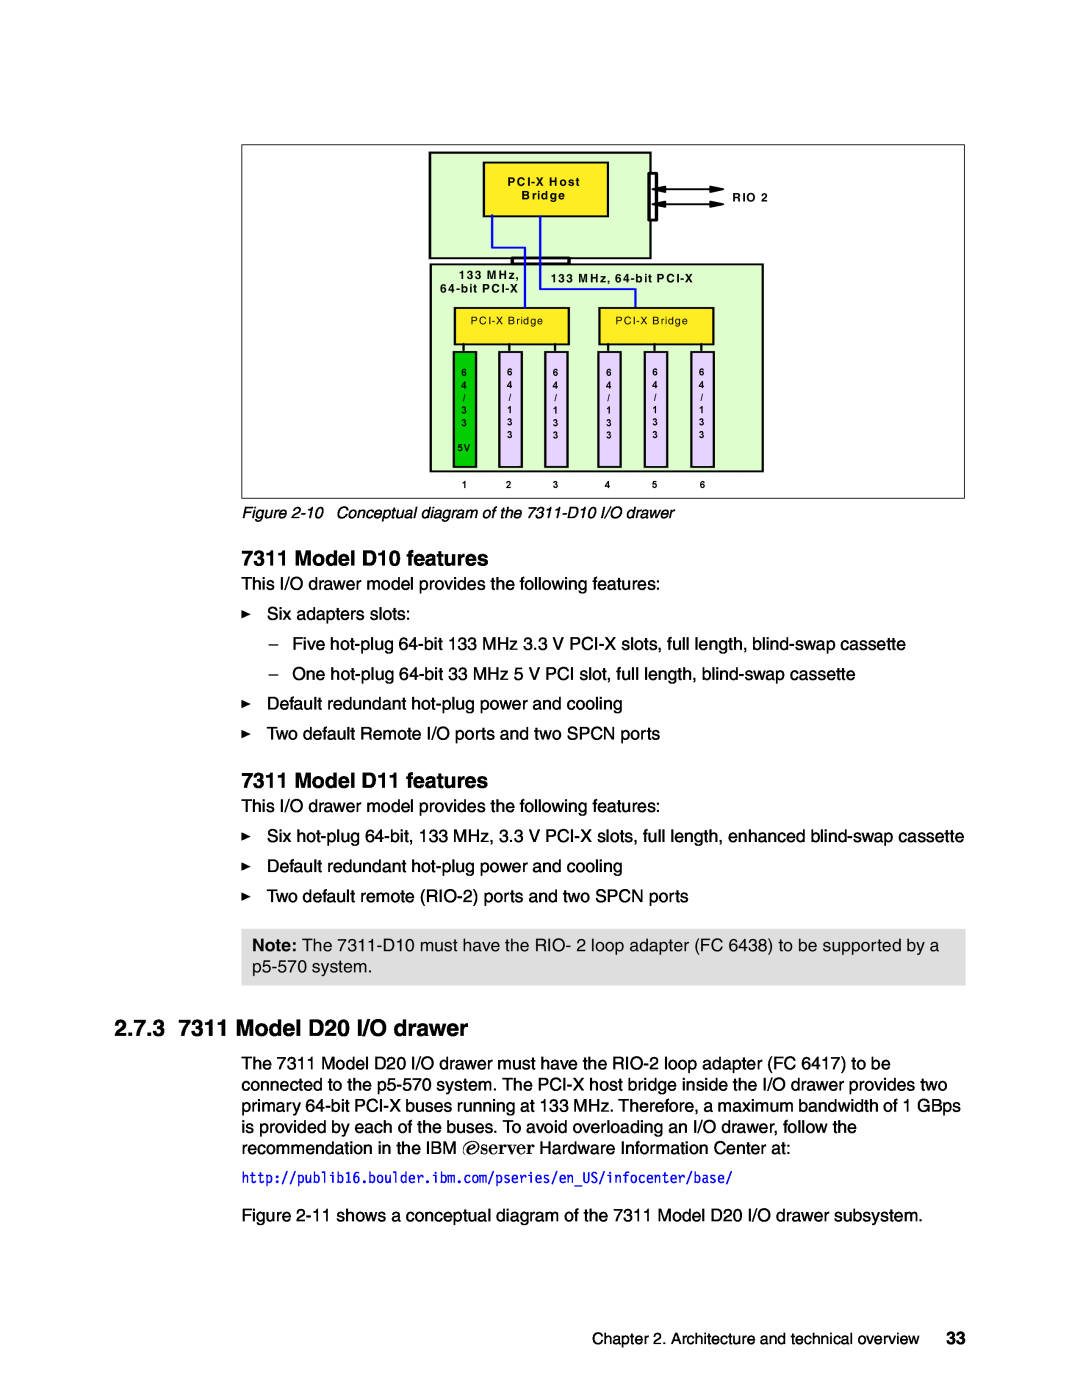 IBM P5 570 manual 2.7.3 7311 Model D20 I/O drawer, Model D10 features, Model D11 features 